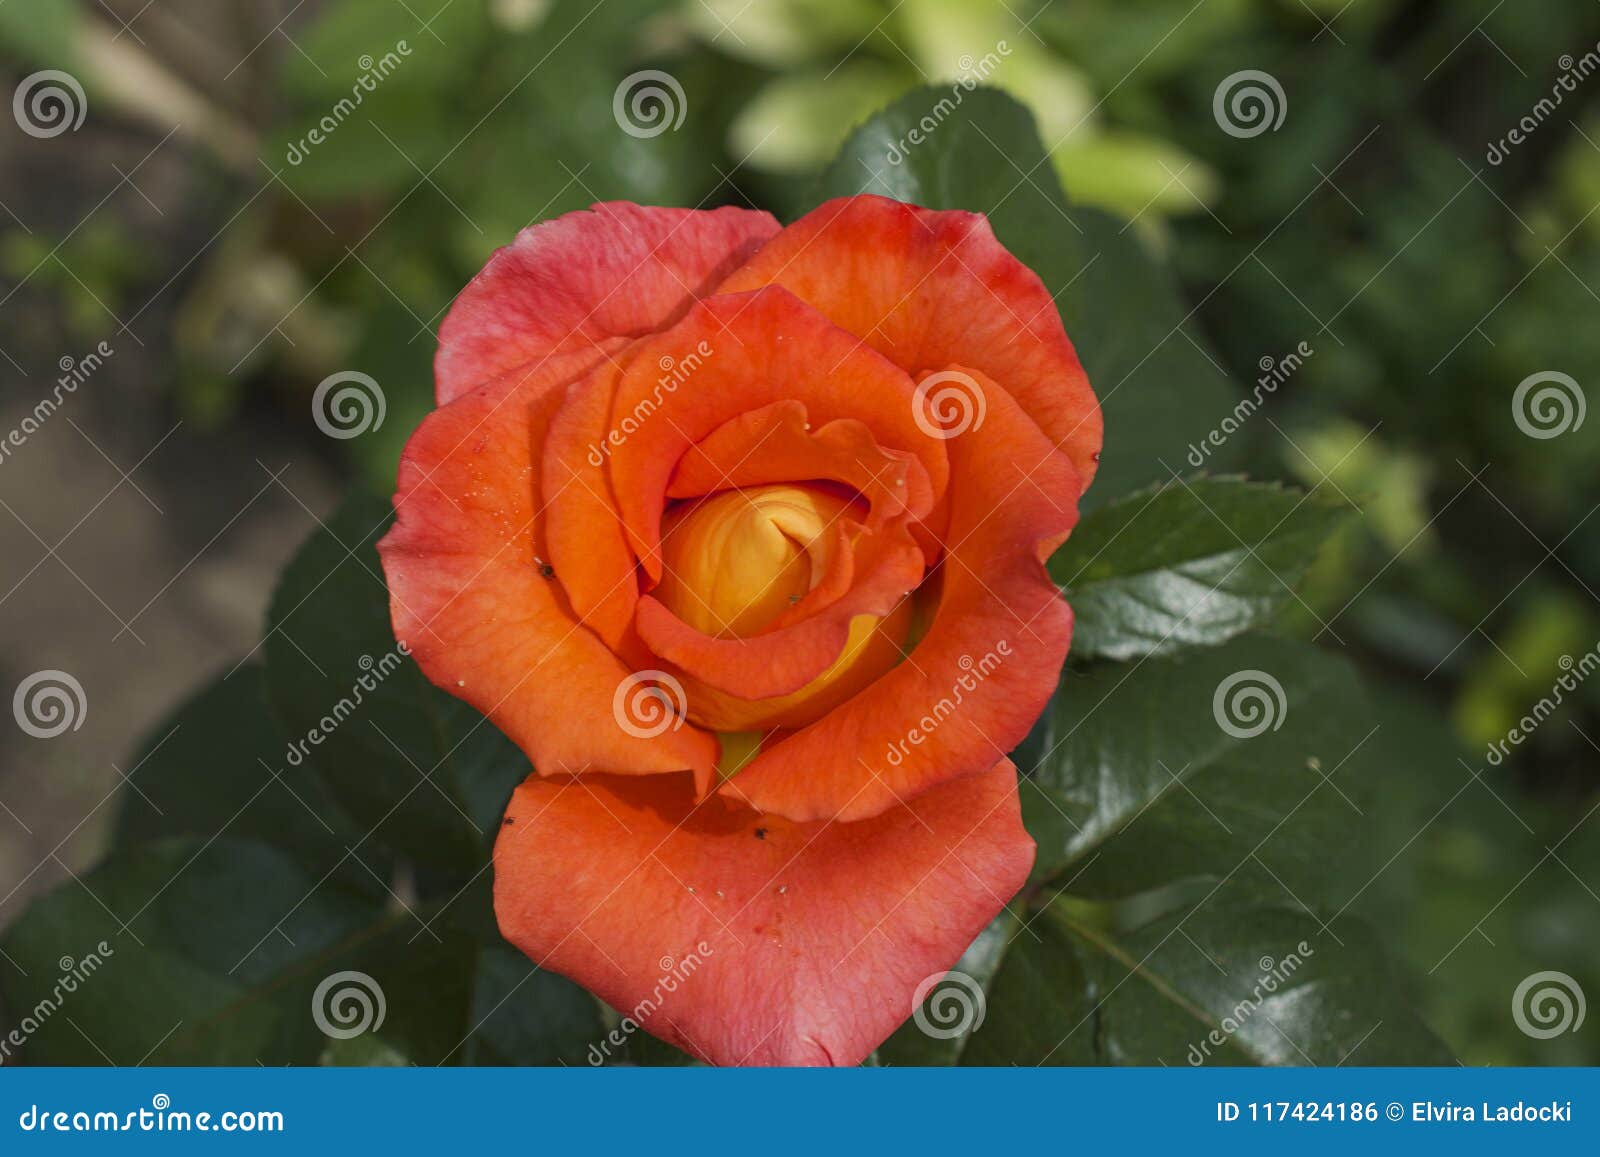 Beautiful Orange Rose Rose in the Sunshine Stock Photo - Image of nice ...